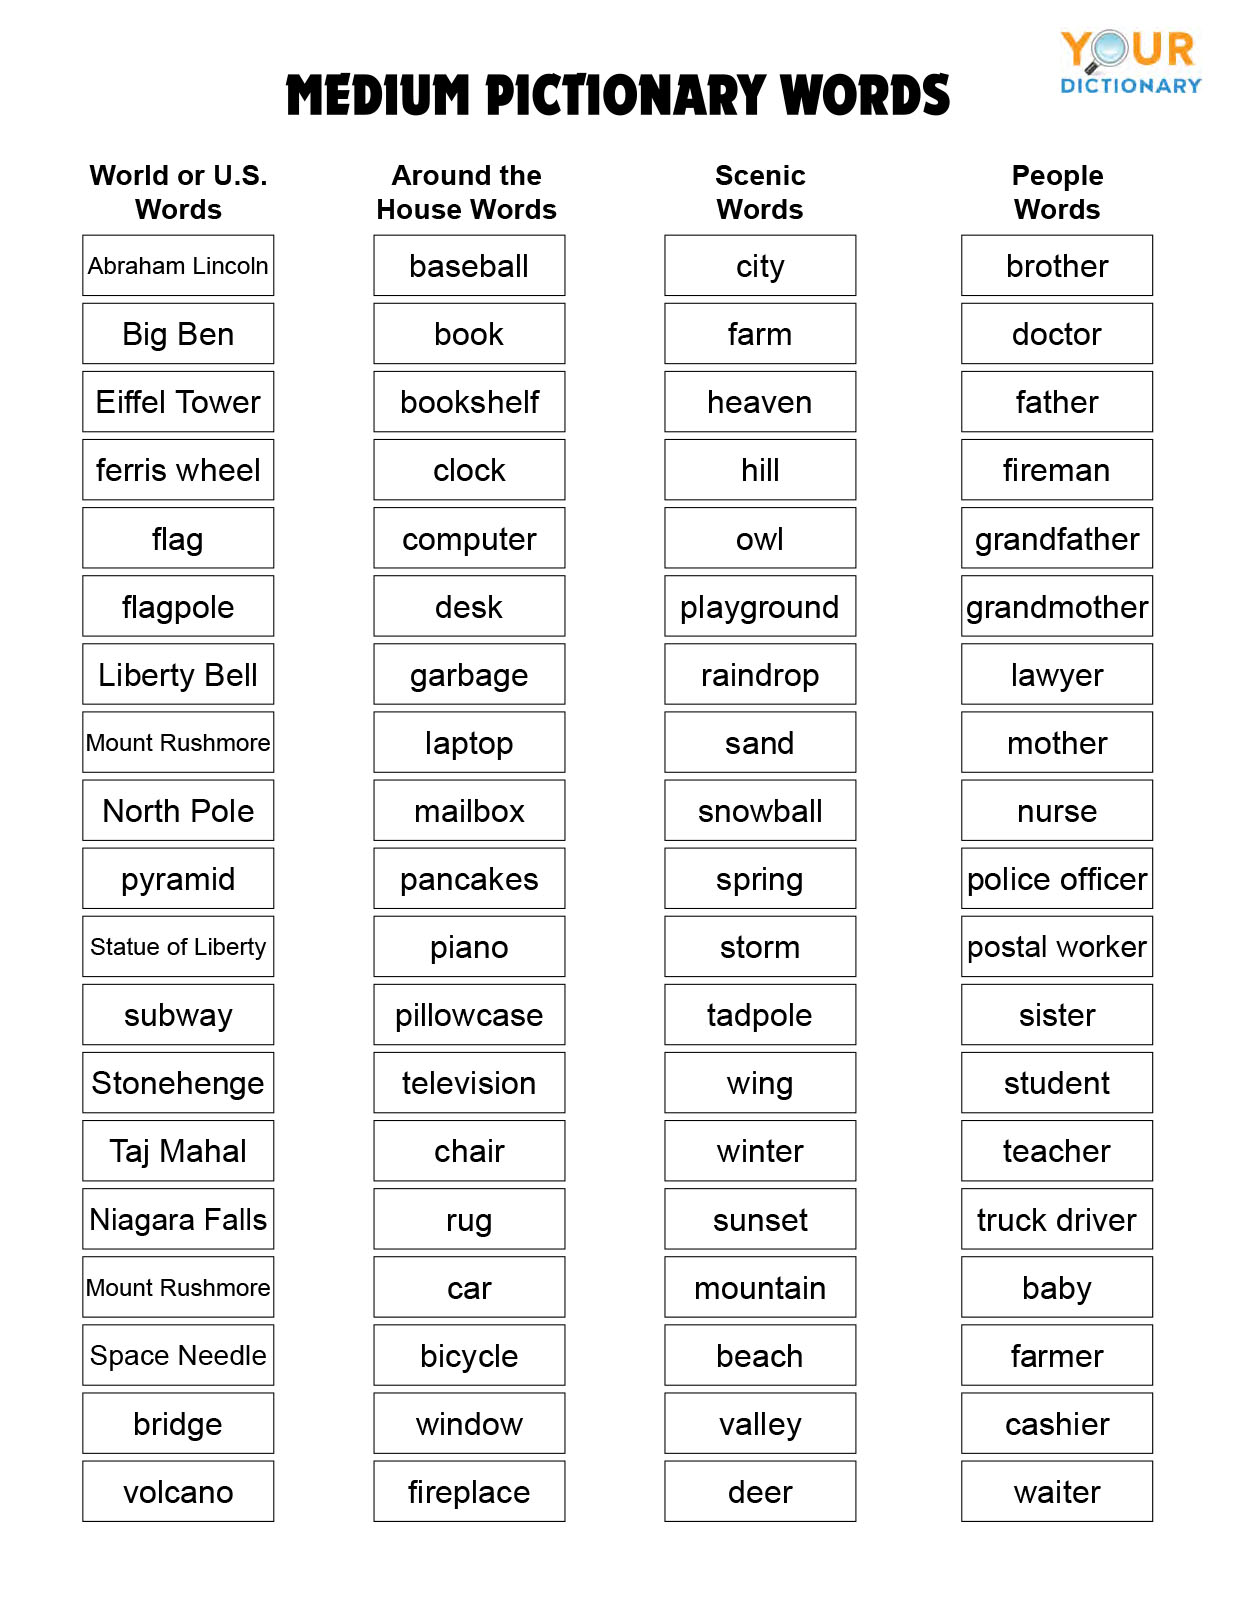 Medium Pictionary Word List